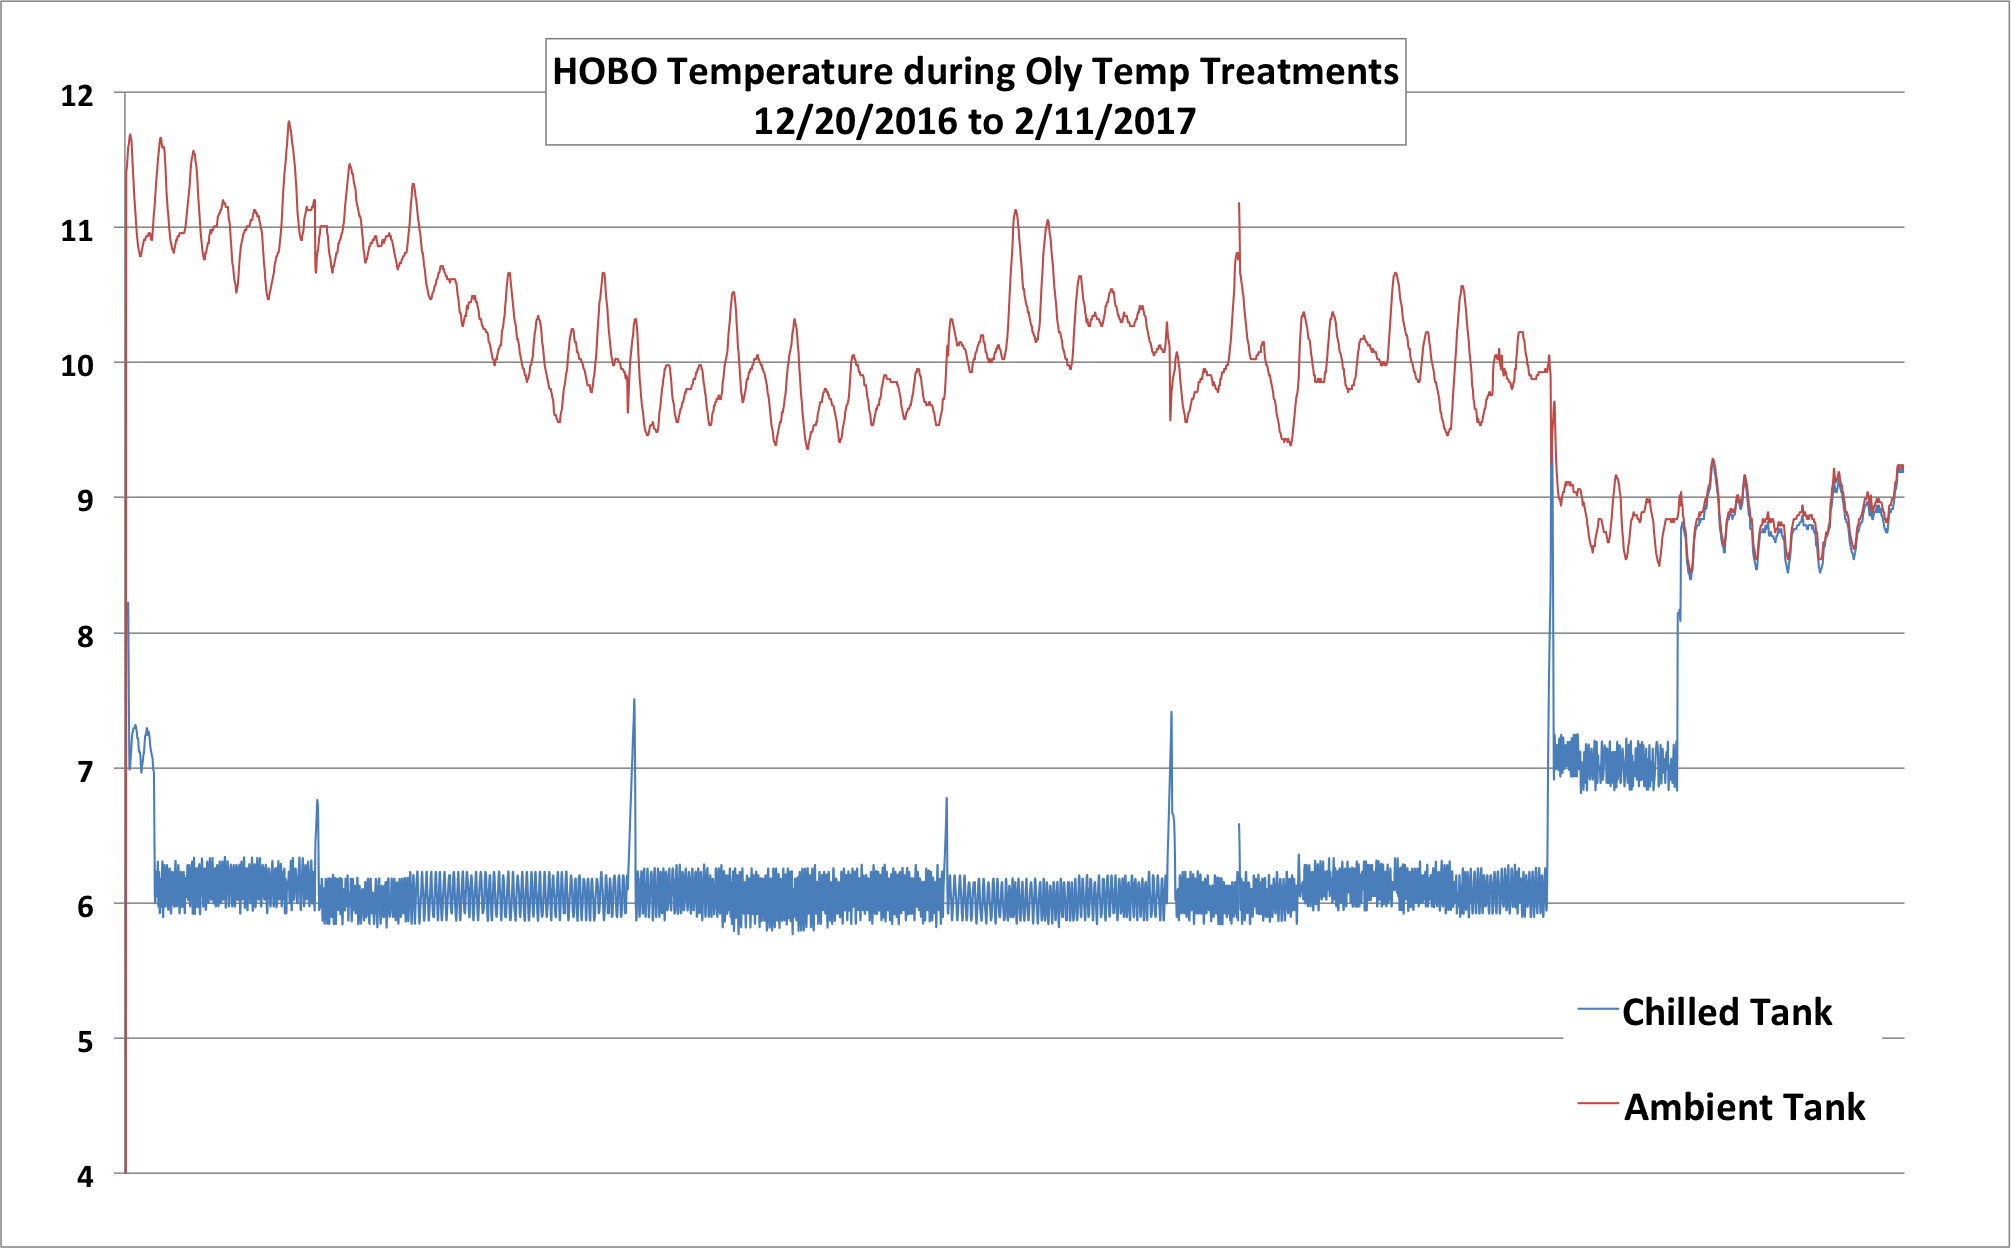 HOBO Temp data during temp treatments